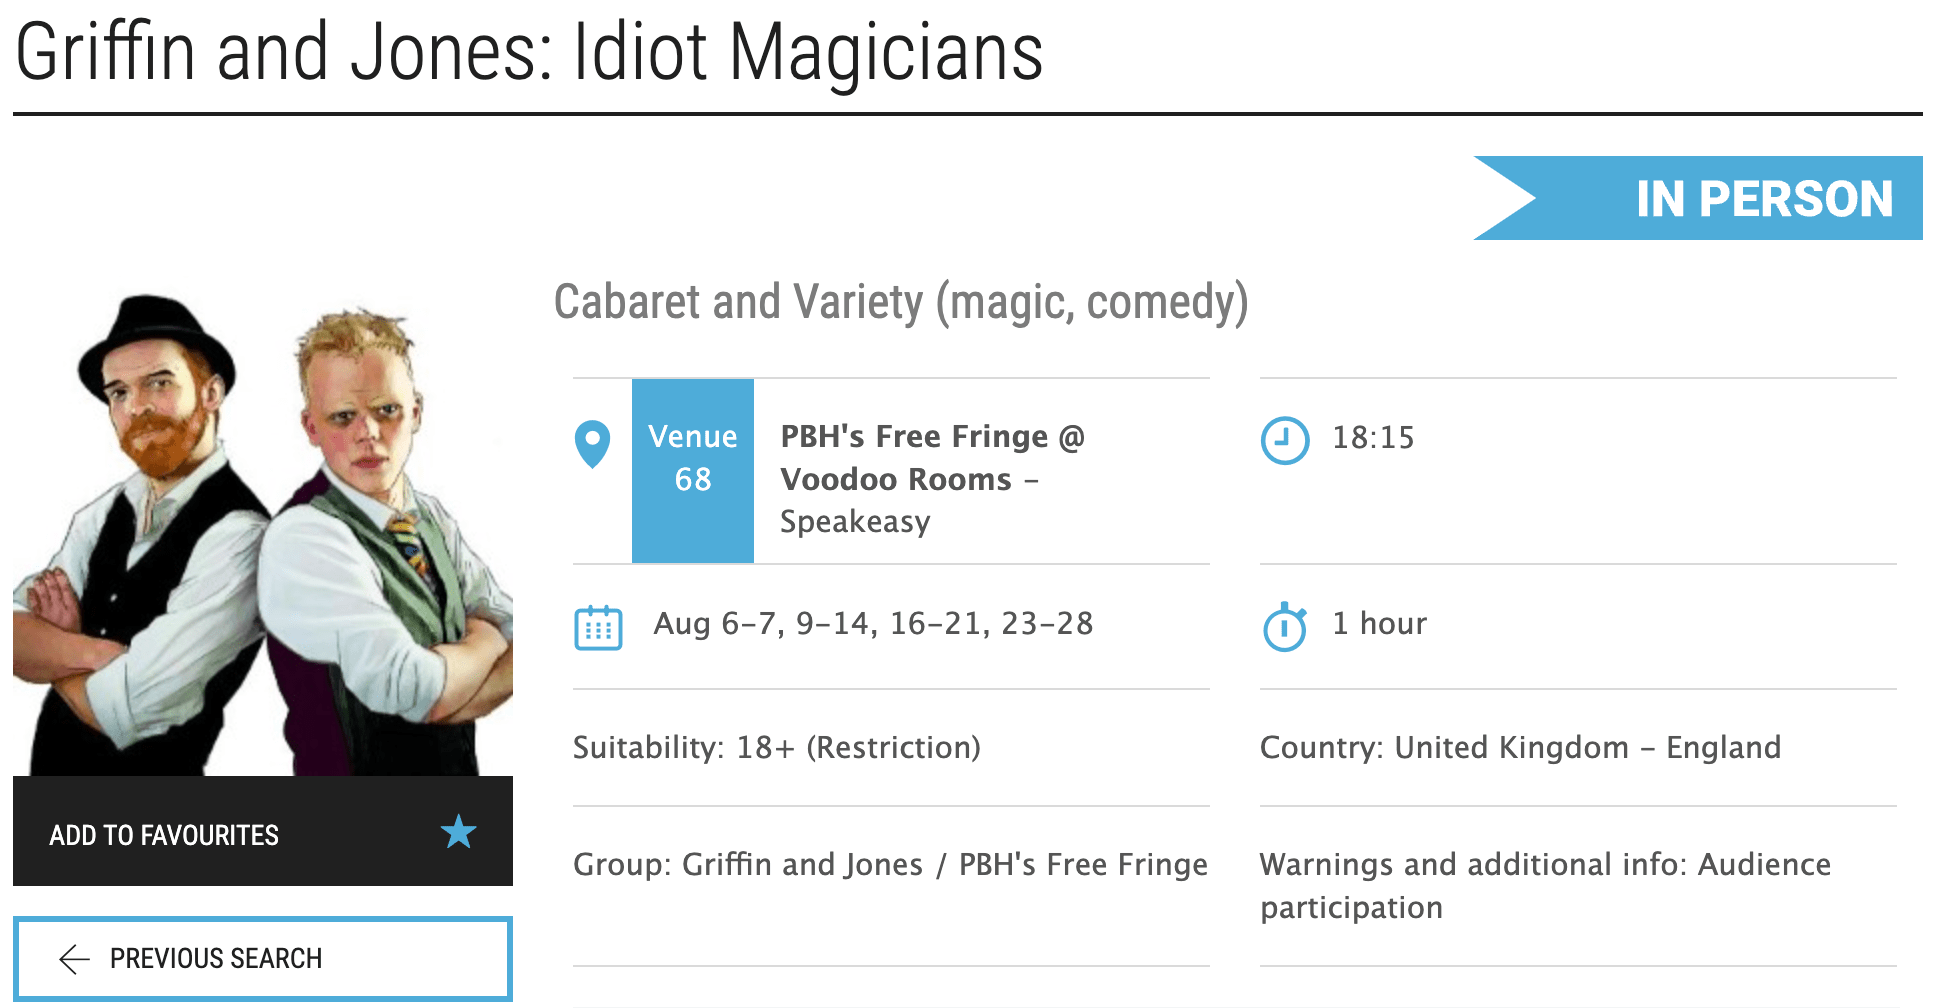 Griffin and Jones Idiot Magicians - Edinburgh Festival Fringe